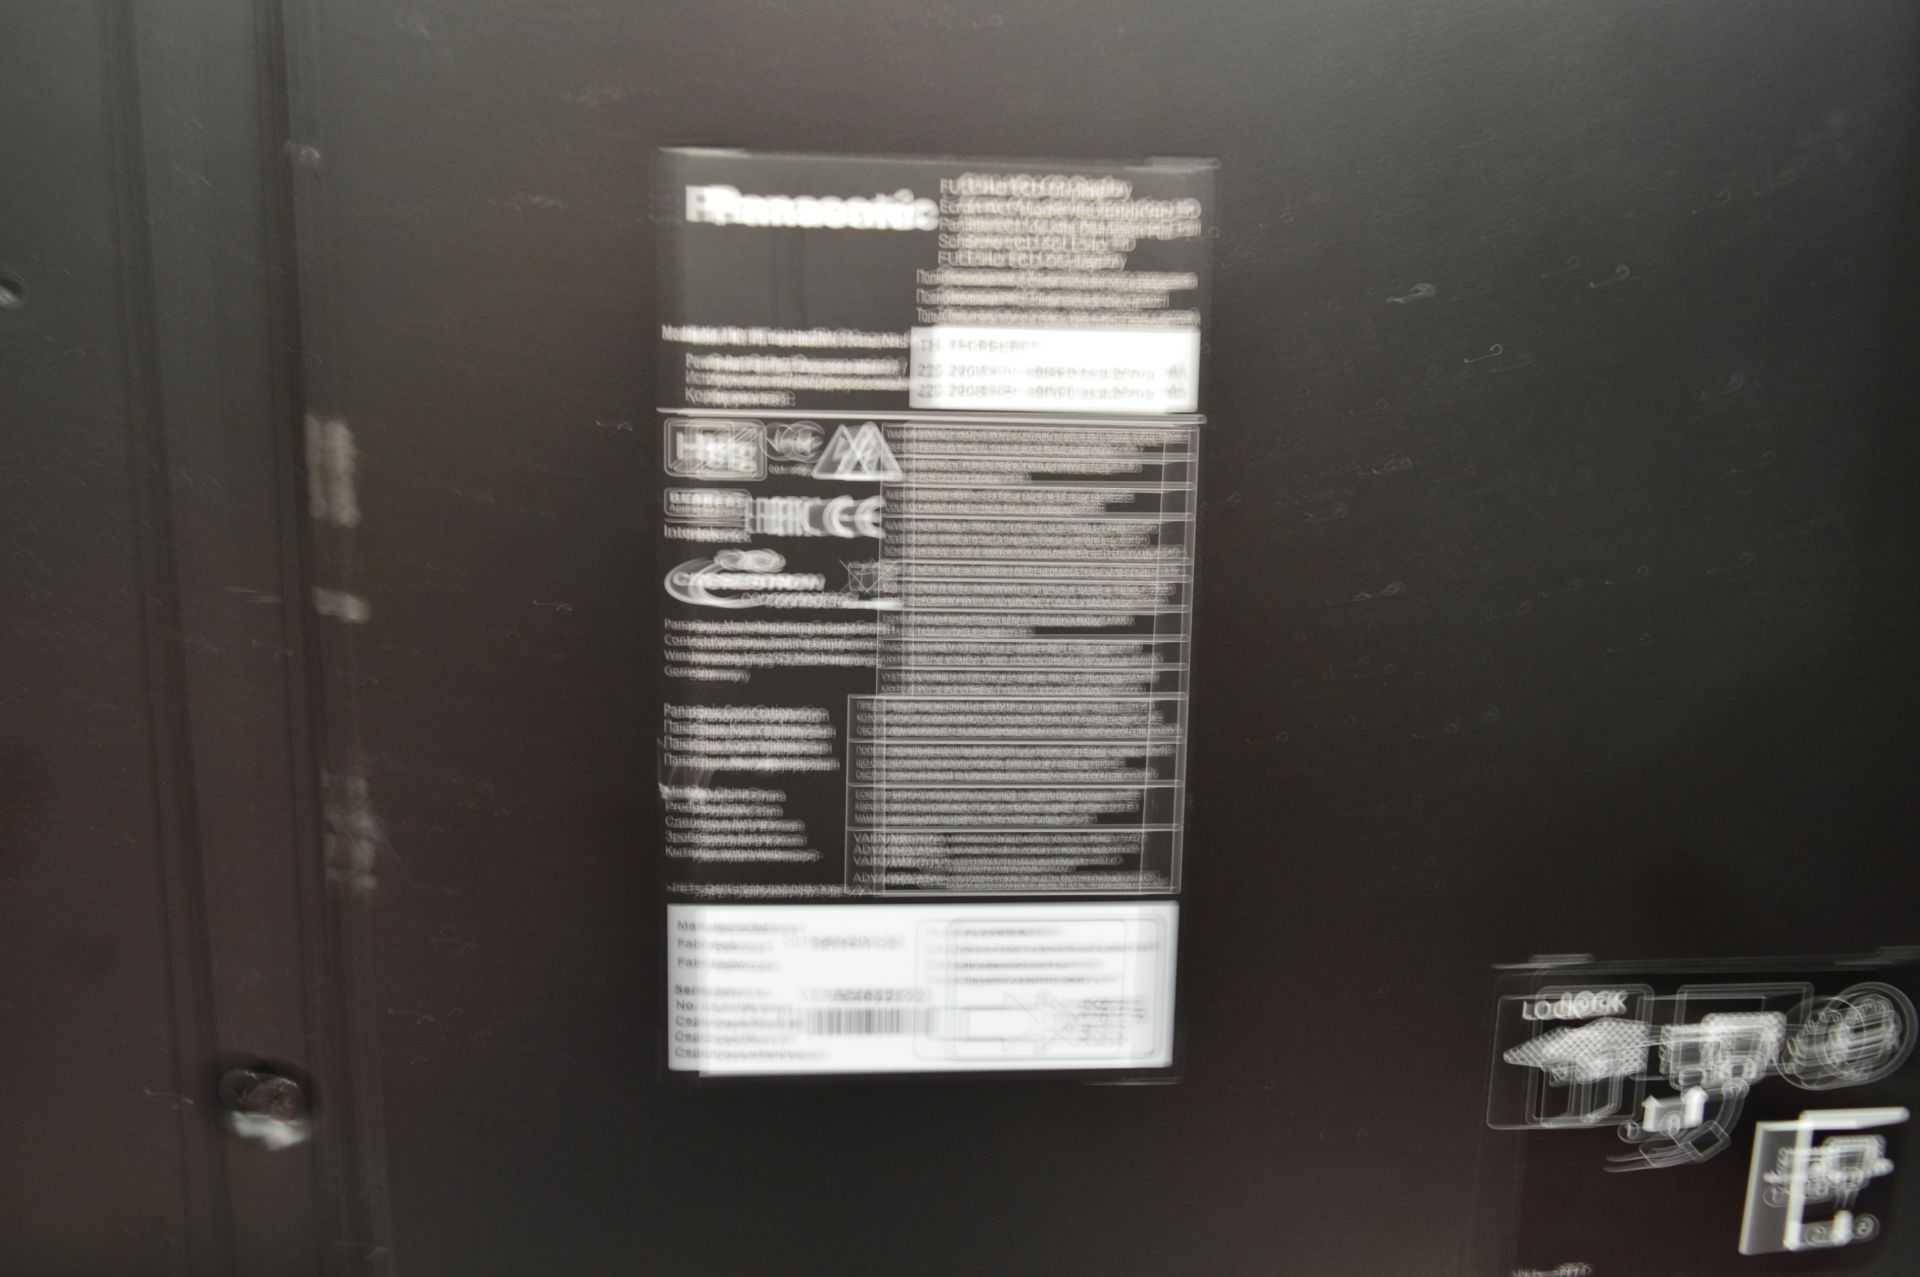 Panasonic, 65" full HD LCD display, Model TH-65LFE - Image 2 of 4